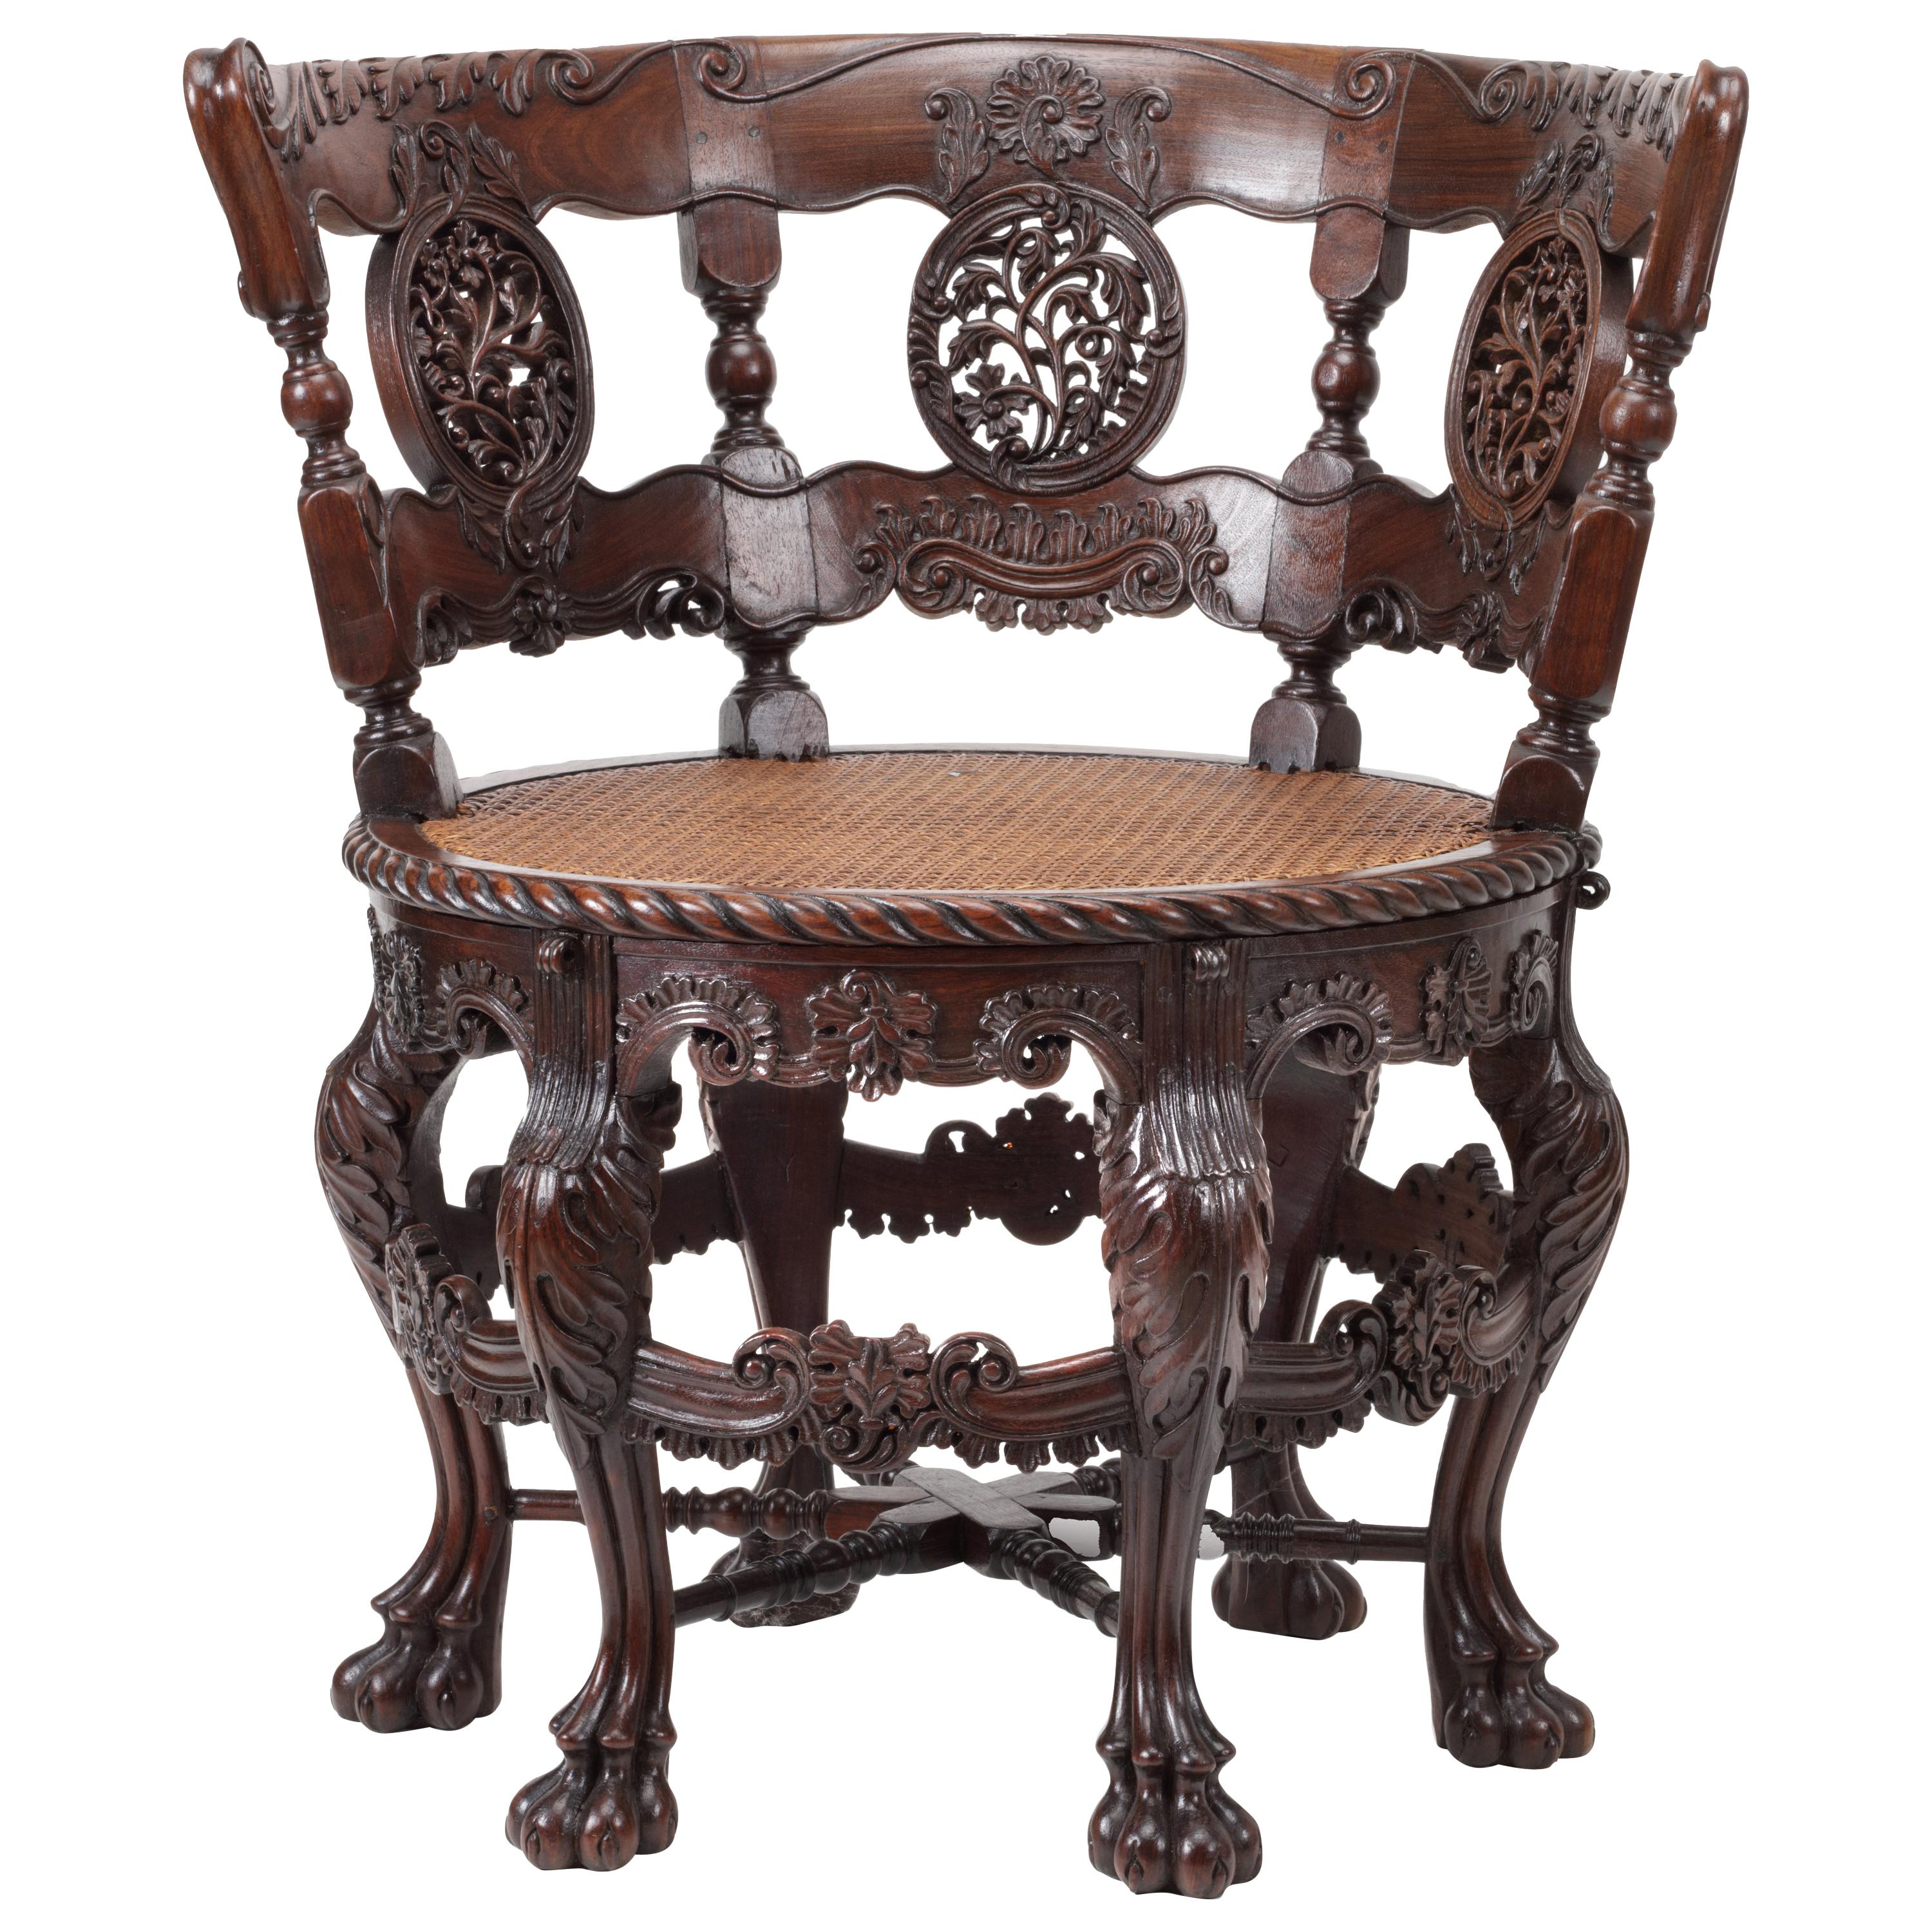 Sri Lankan Mãrã or East Indian Walnut ‘Burgomaster’ Chair For Sale